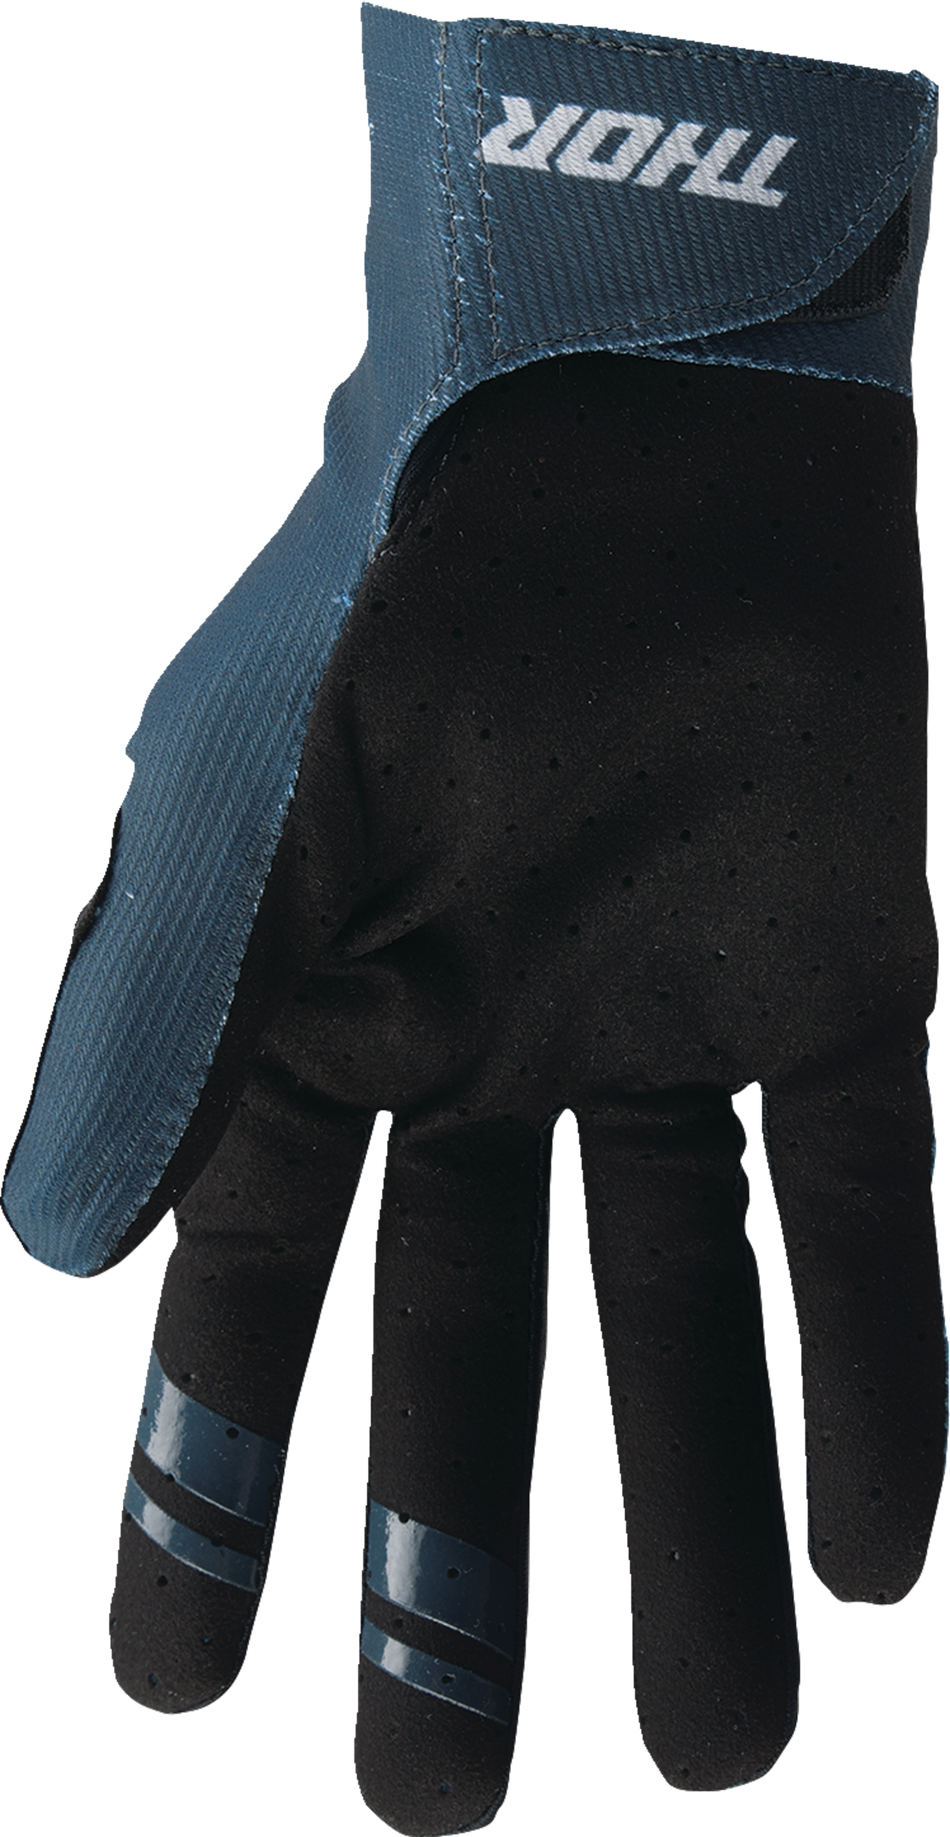 THOR Intense Assist Censis Gloves - Teal/Midnight - Medium 3360-0237